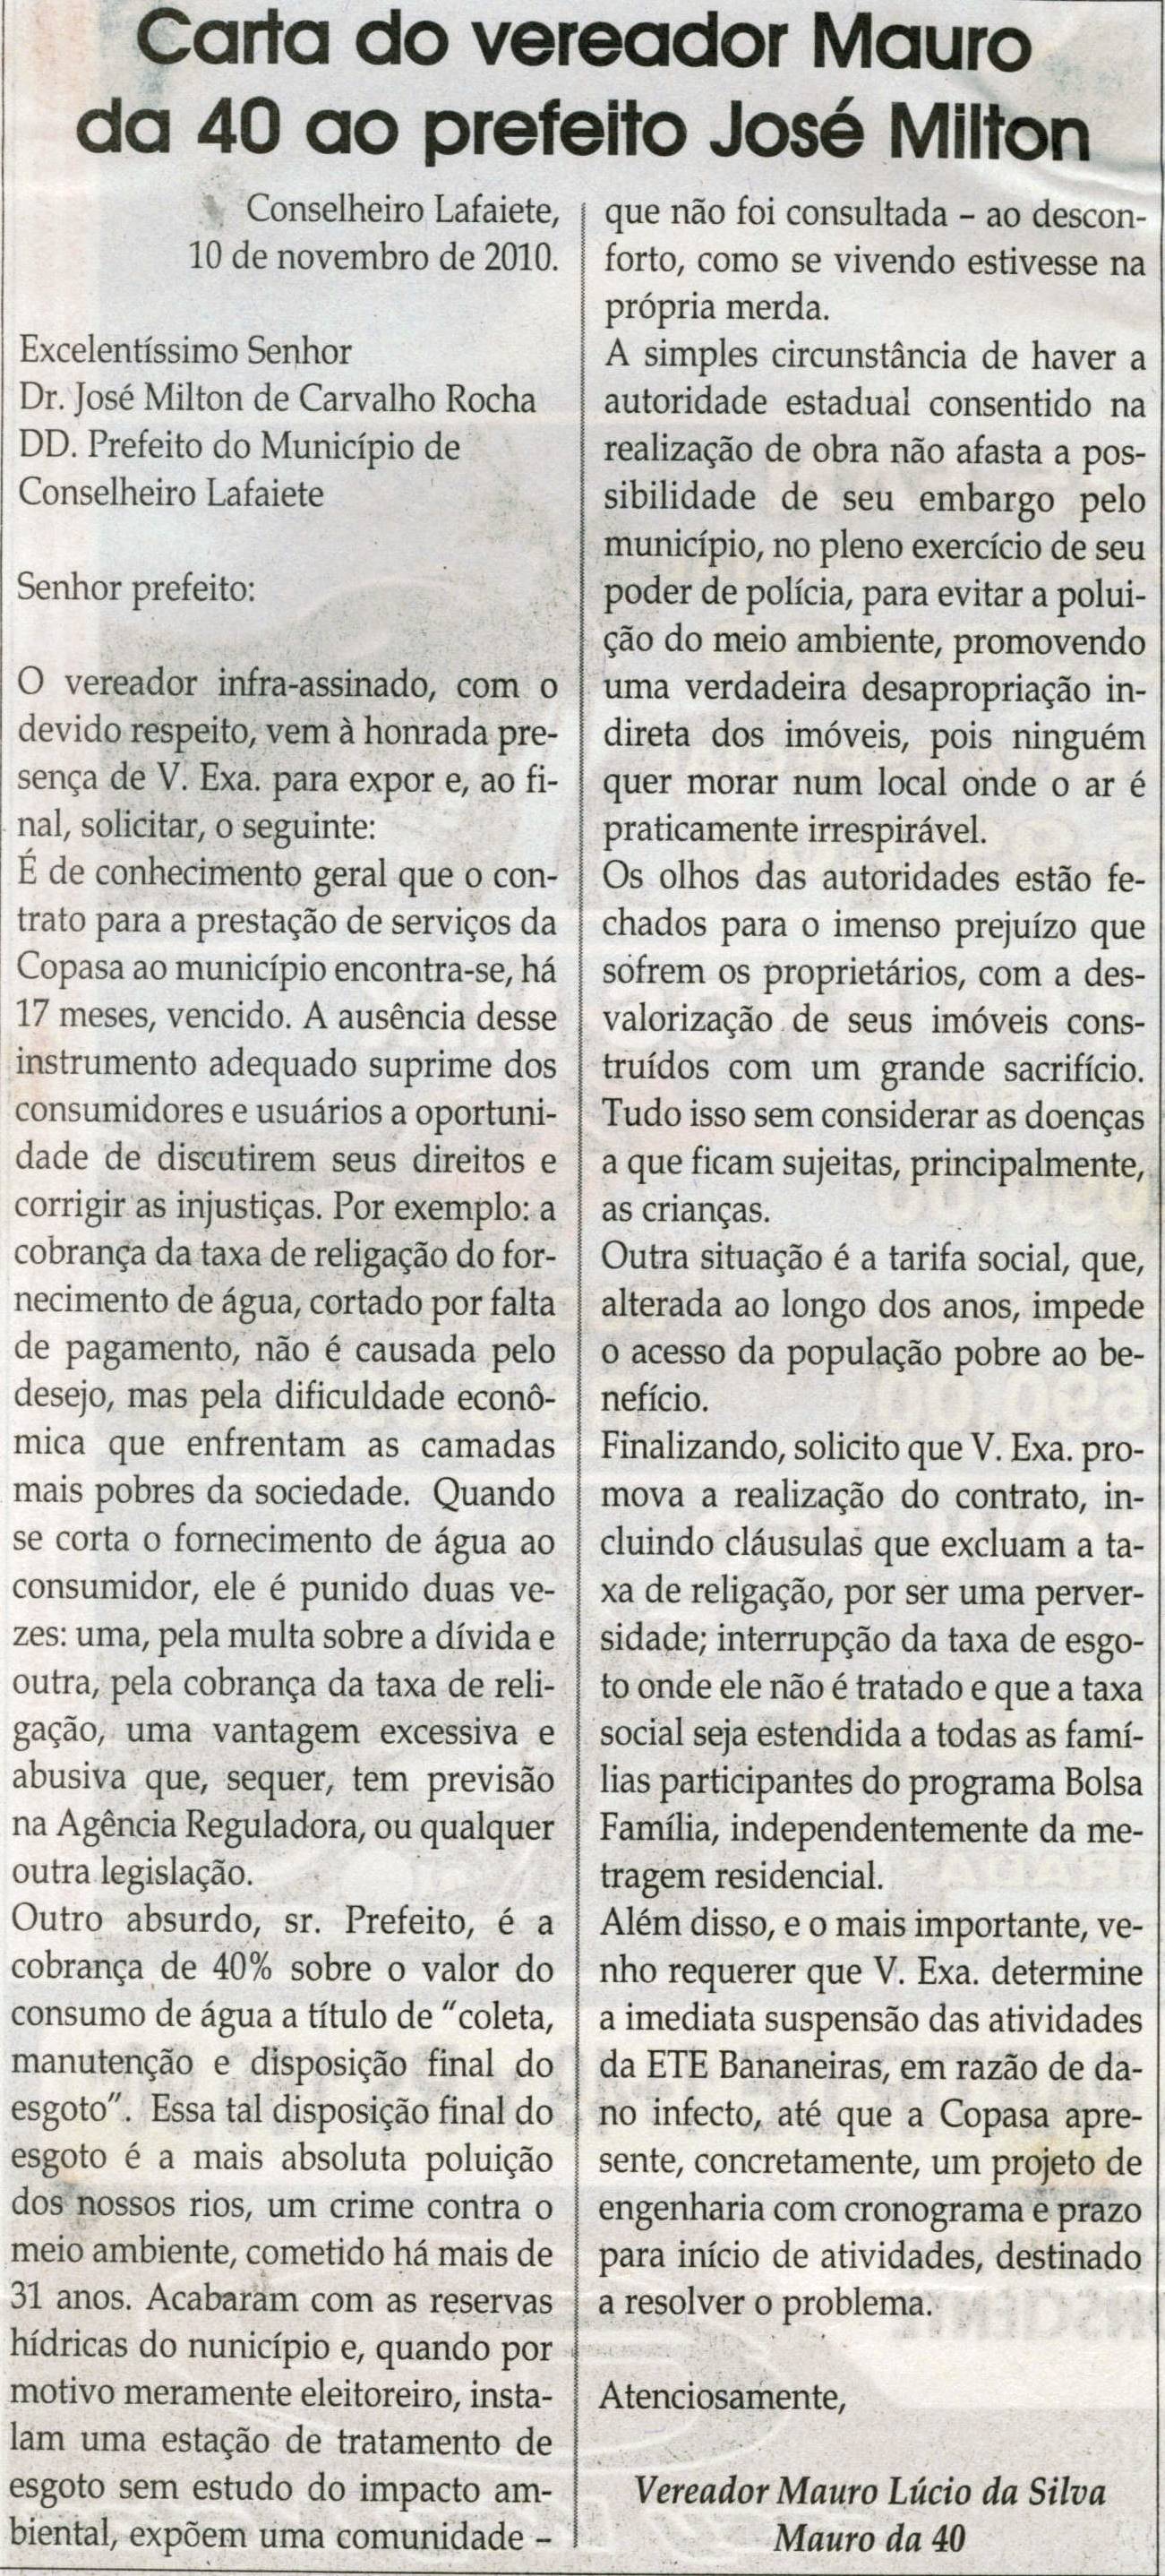 Carta do vereador Mauro da 40 ao prefeito José Milton. Jornal Correio da Cidade, Conselheiro Lafaiete, 13 nov. 2010, p. 04.